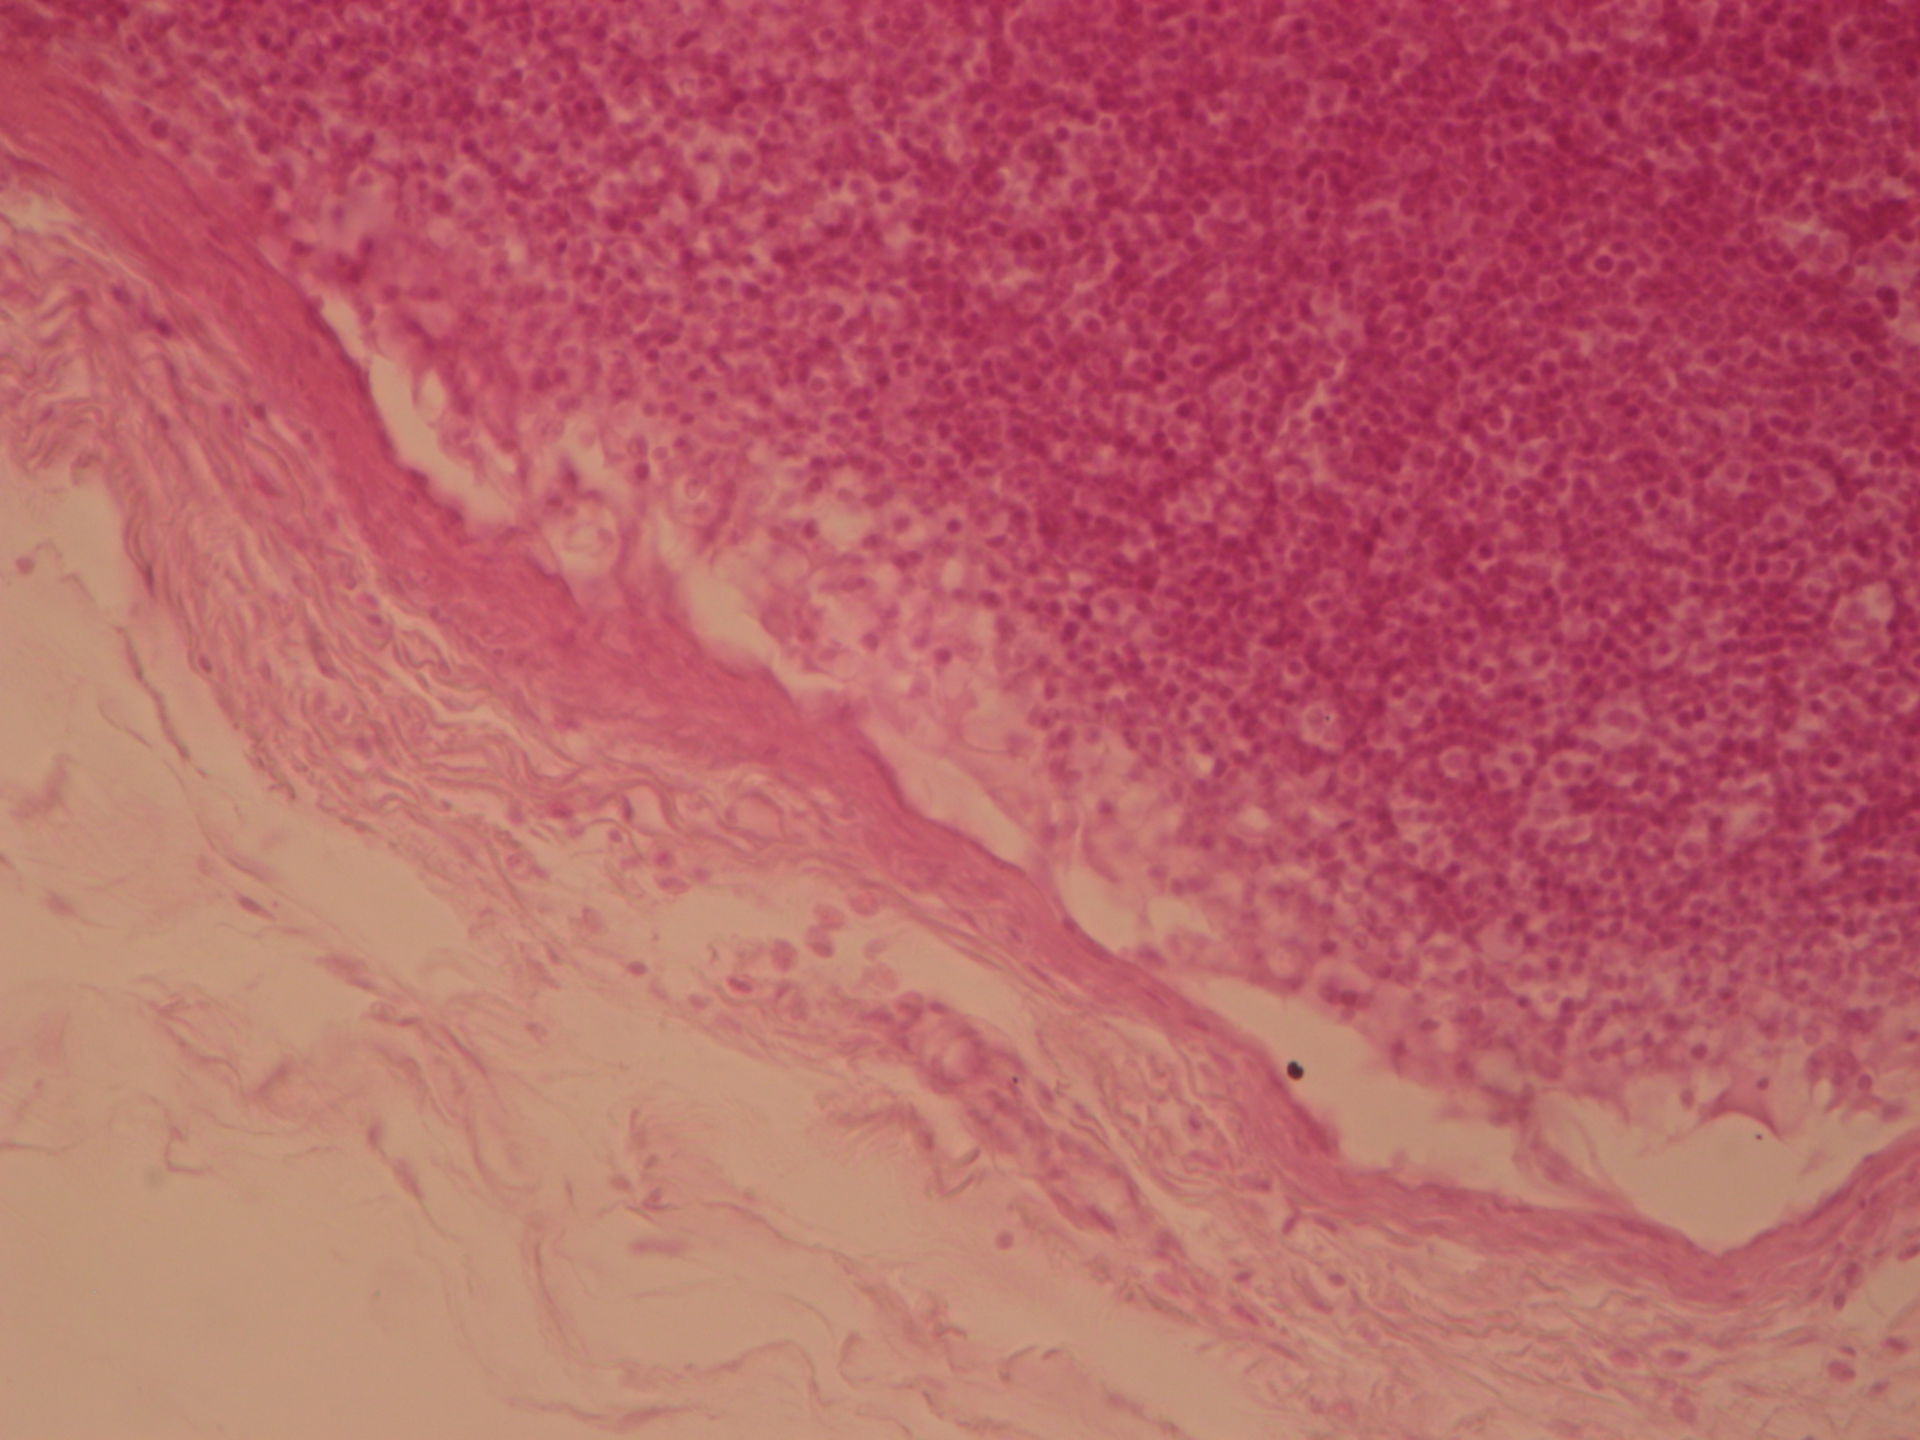 Lymphknoten des Rindes 9 - Marginalsinus